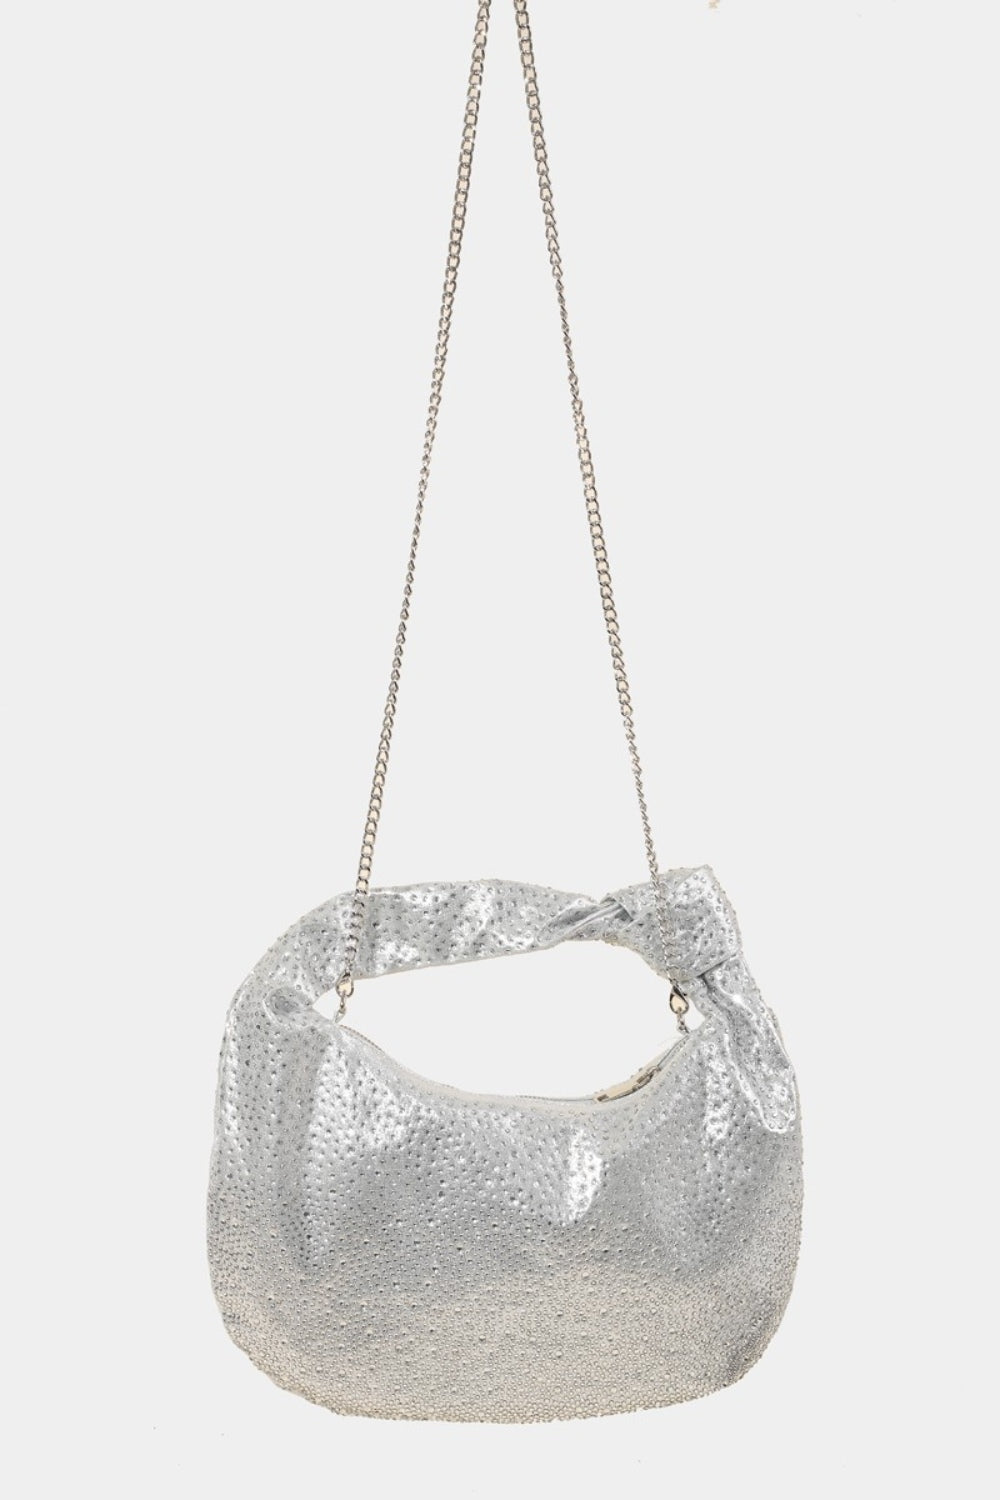 Cami Rhinestone Studded Handbag